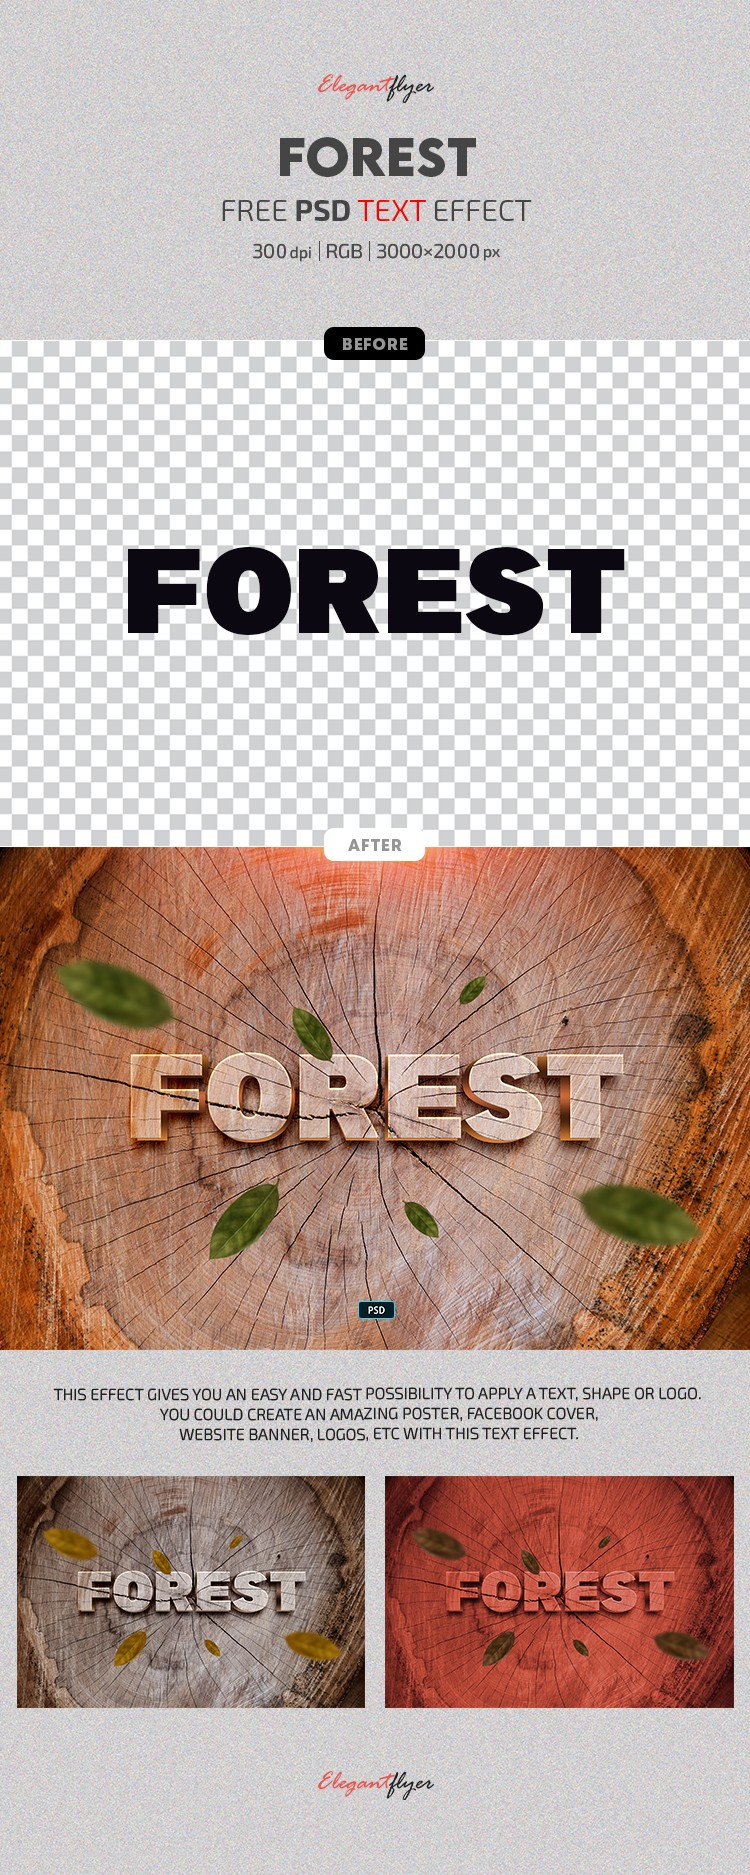 Forest Text Effect by ElegantFlyer